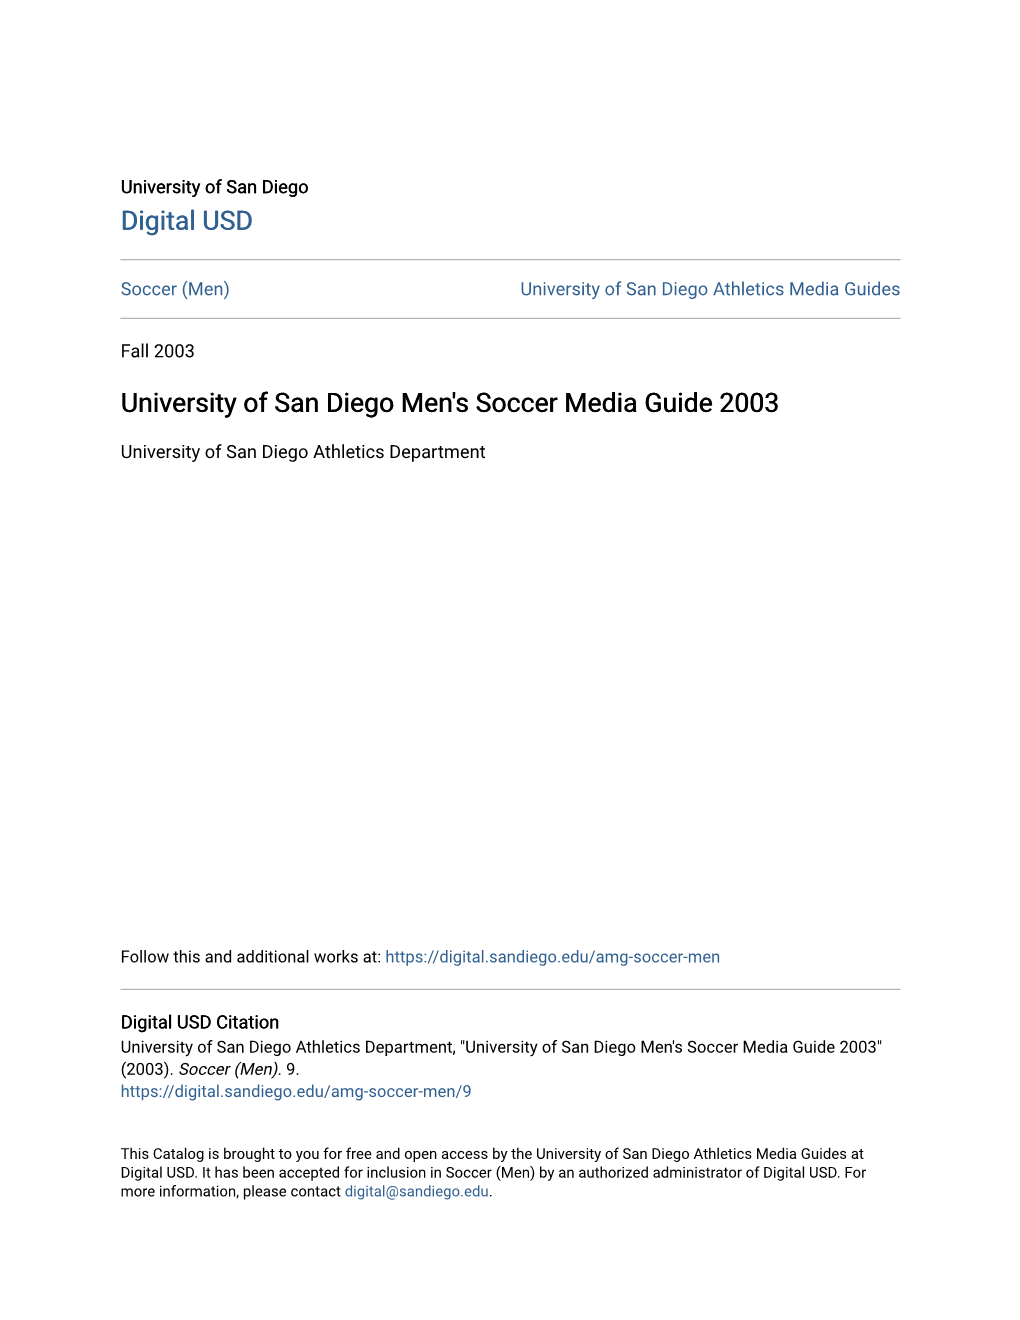 University of San Diego Men's Soccer Media Guide 2003